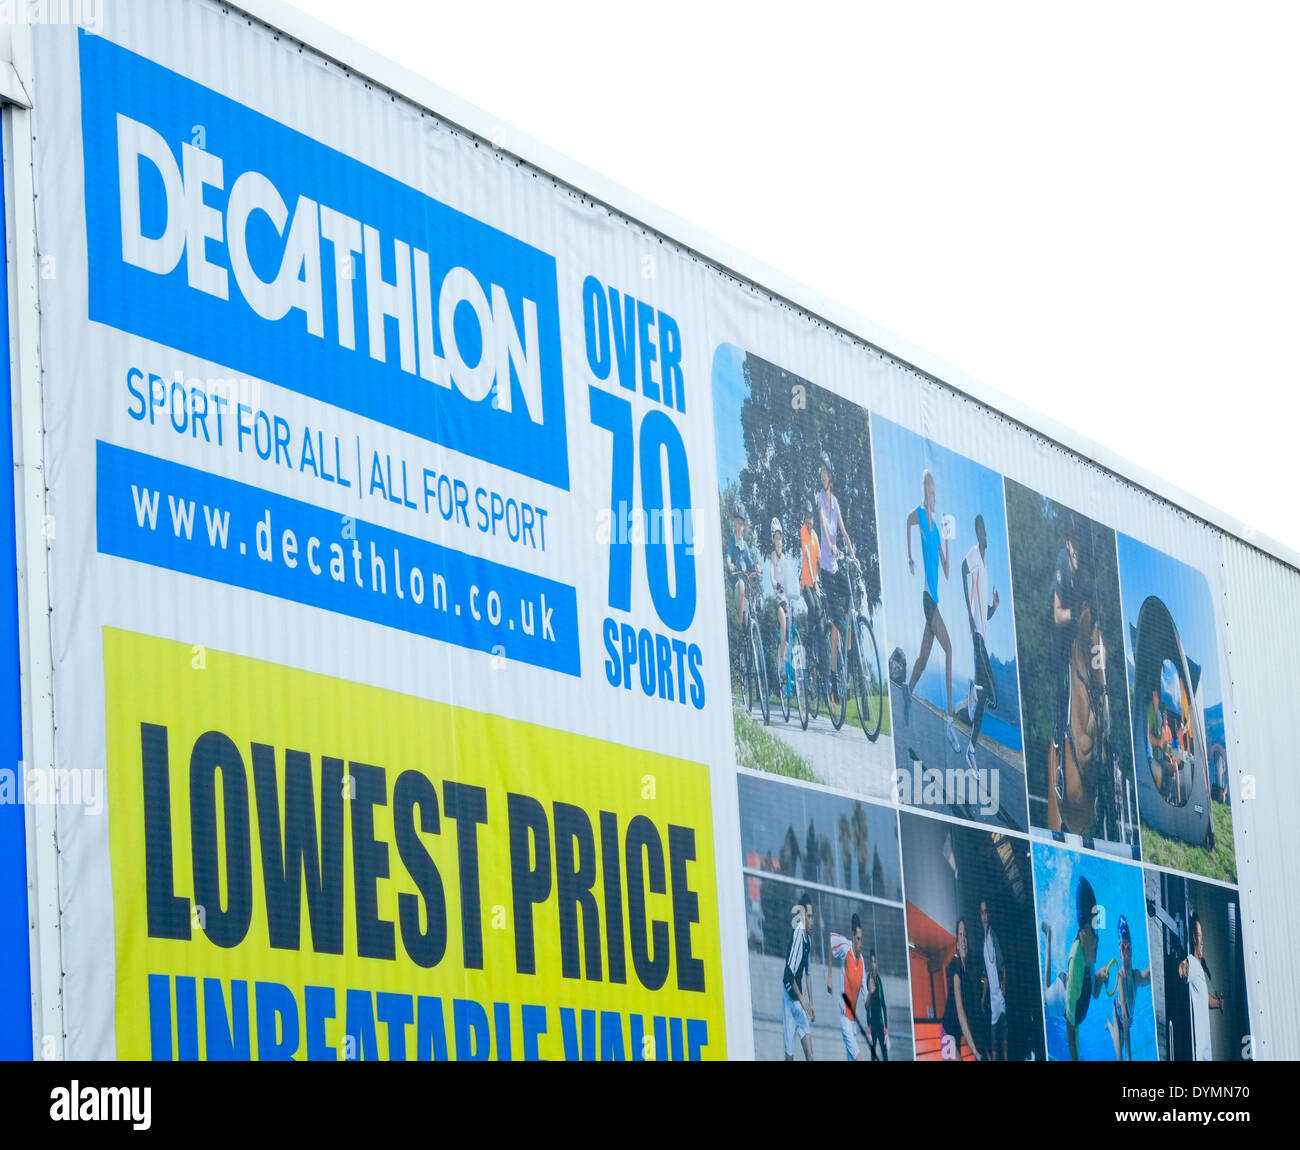 Decathlon outdoor advertising wall banner UK Stock Photo - Alamy